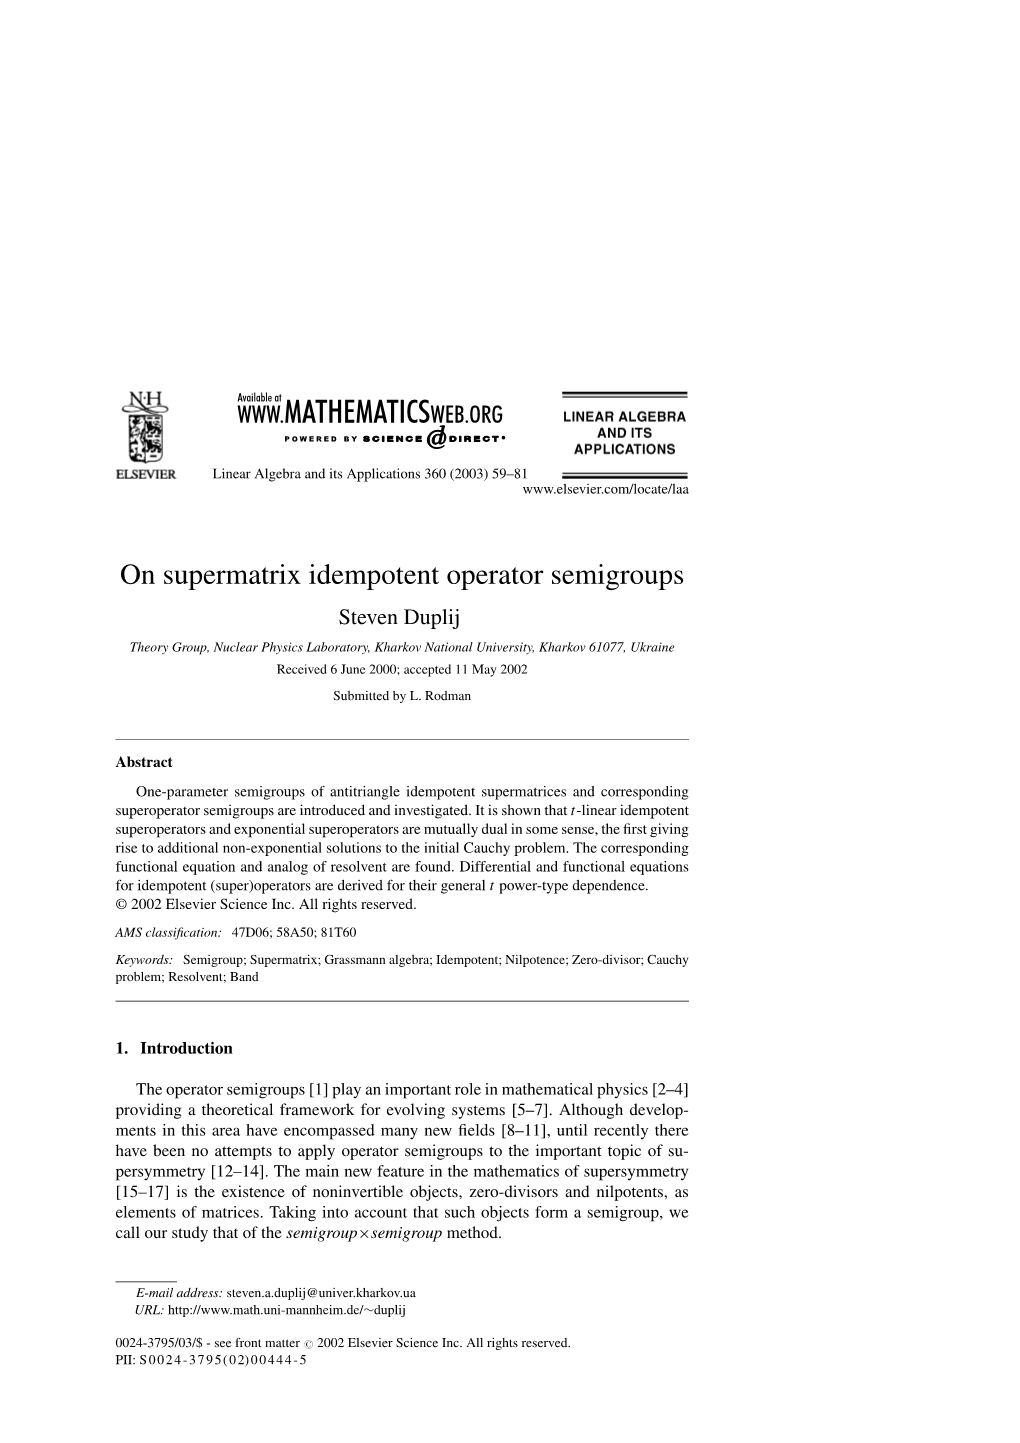 On Supermatrix Idempotent Operator Semigroups